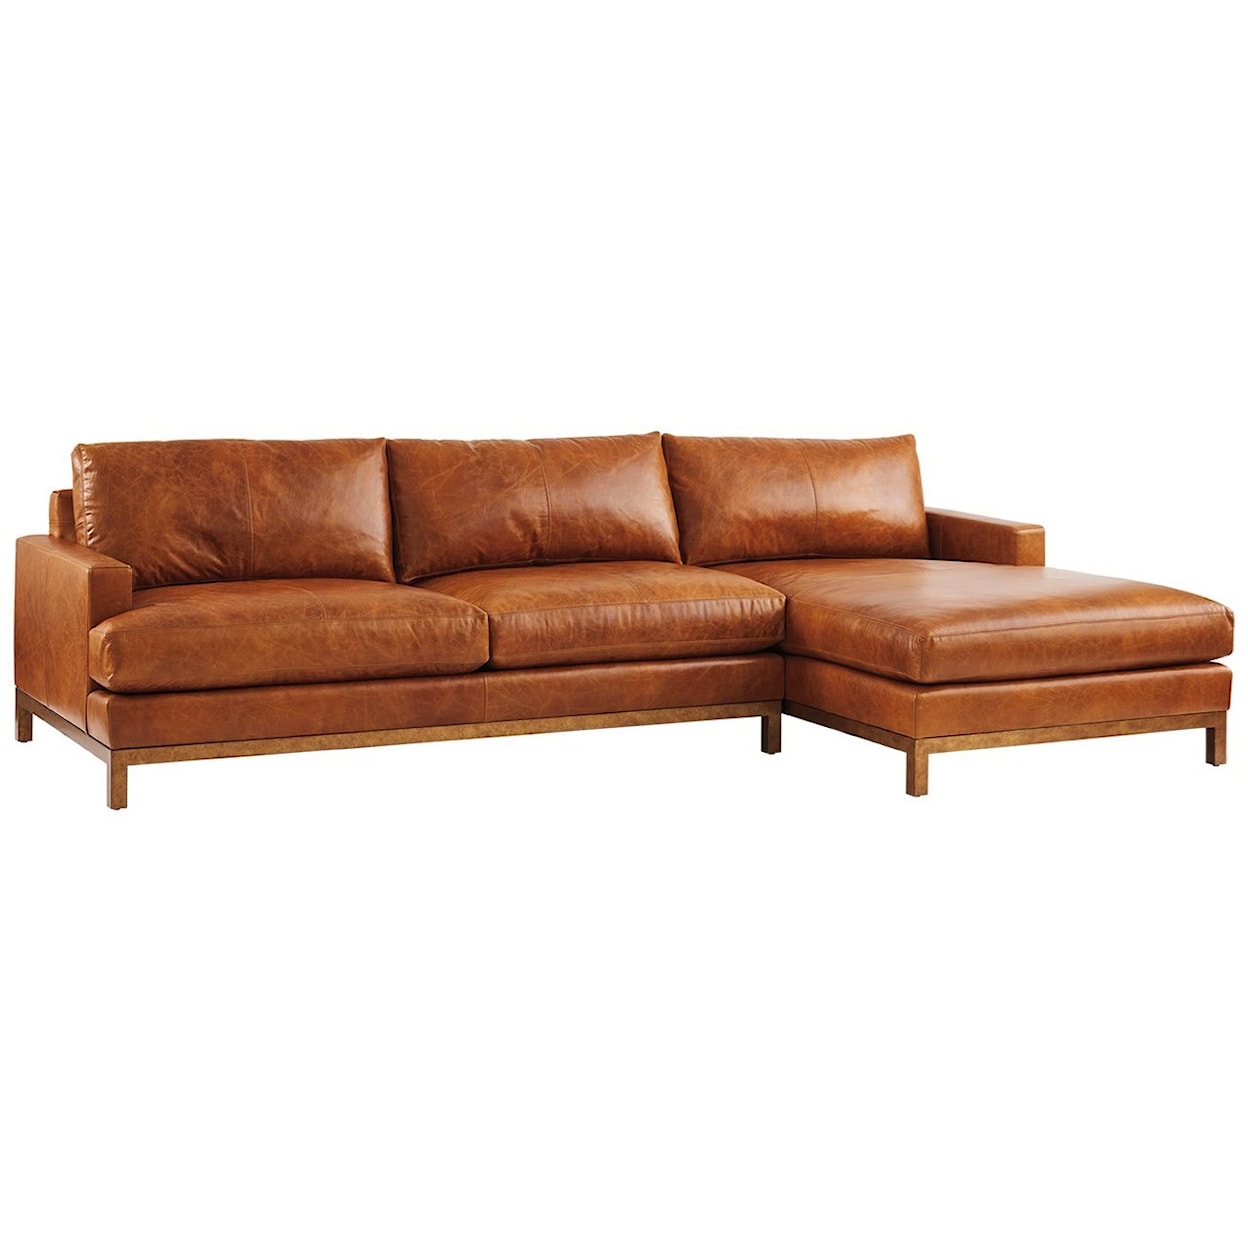 Barclay Butera Barclay Butera Upholstery 2-Piece Leather Sectional Sofa w/Brass Base